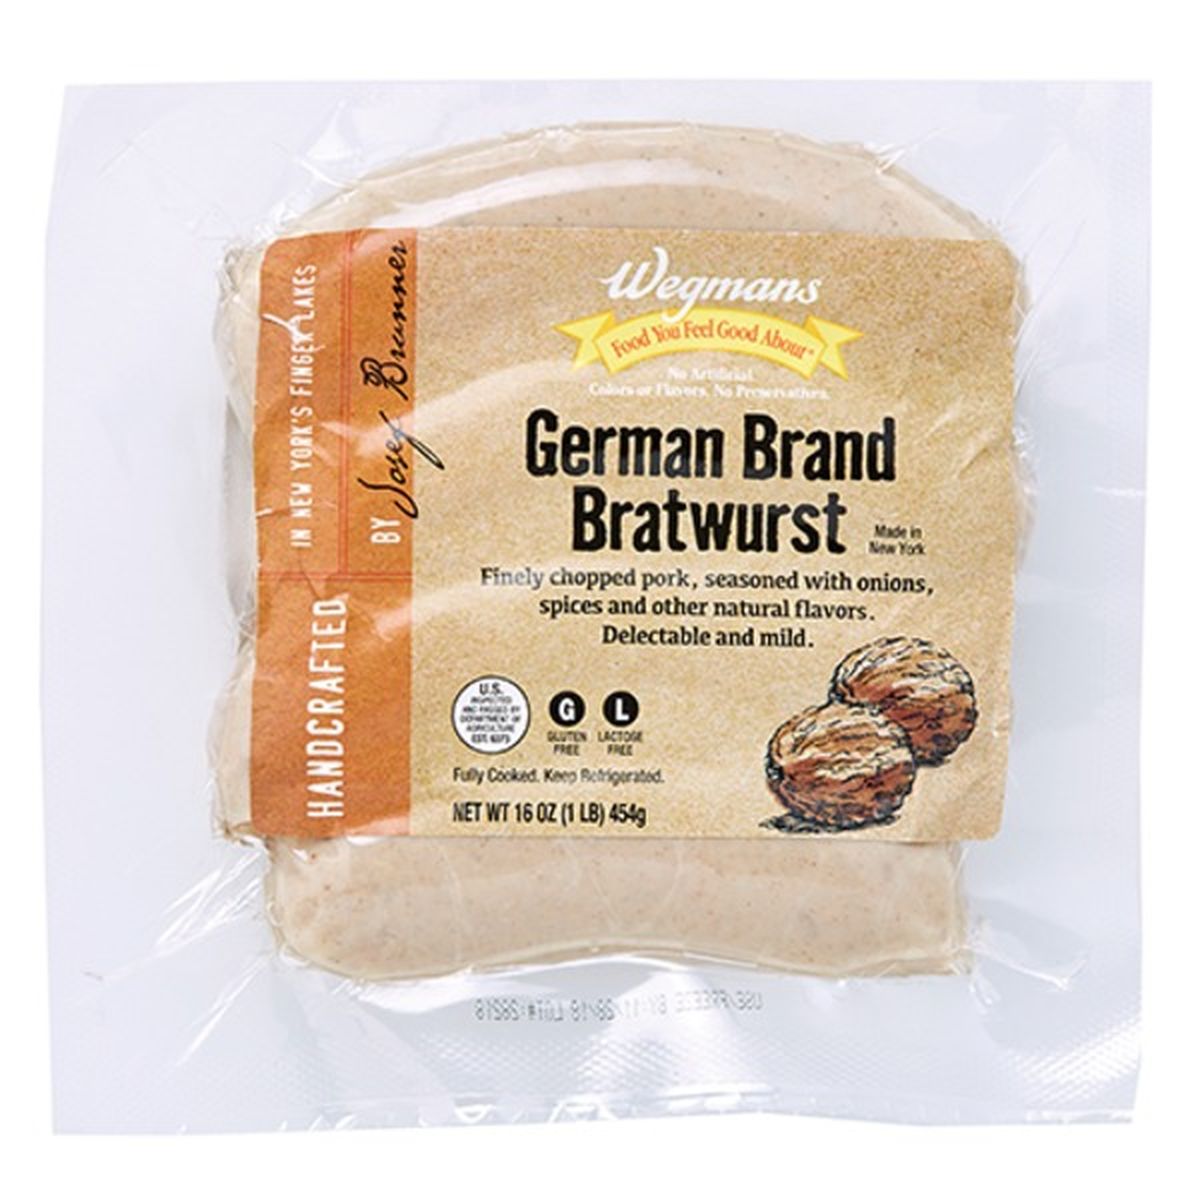 Calories in Wegmans German Brand Bratwurst